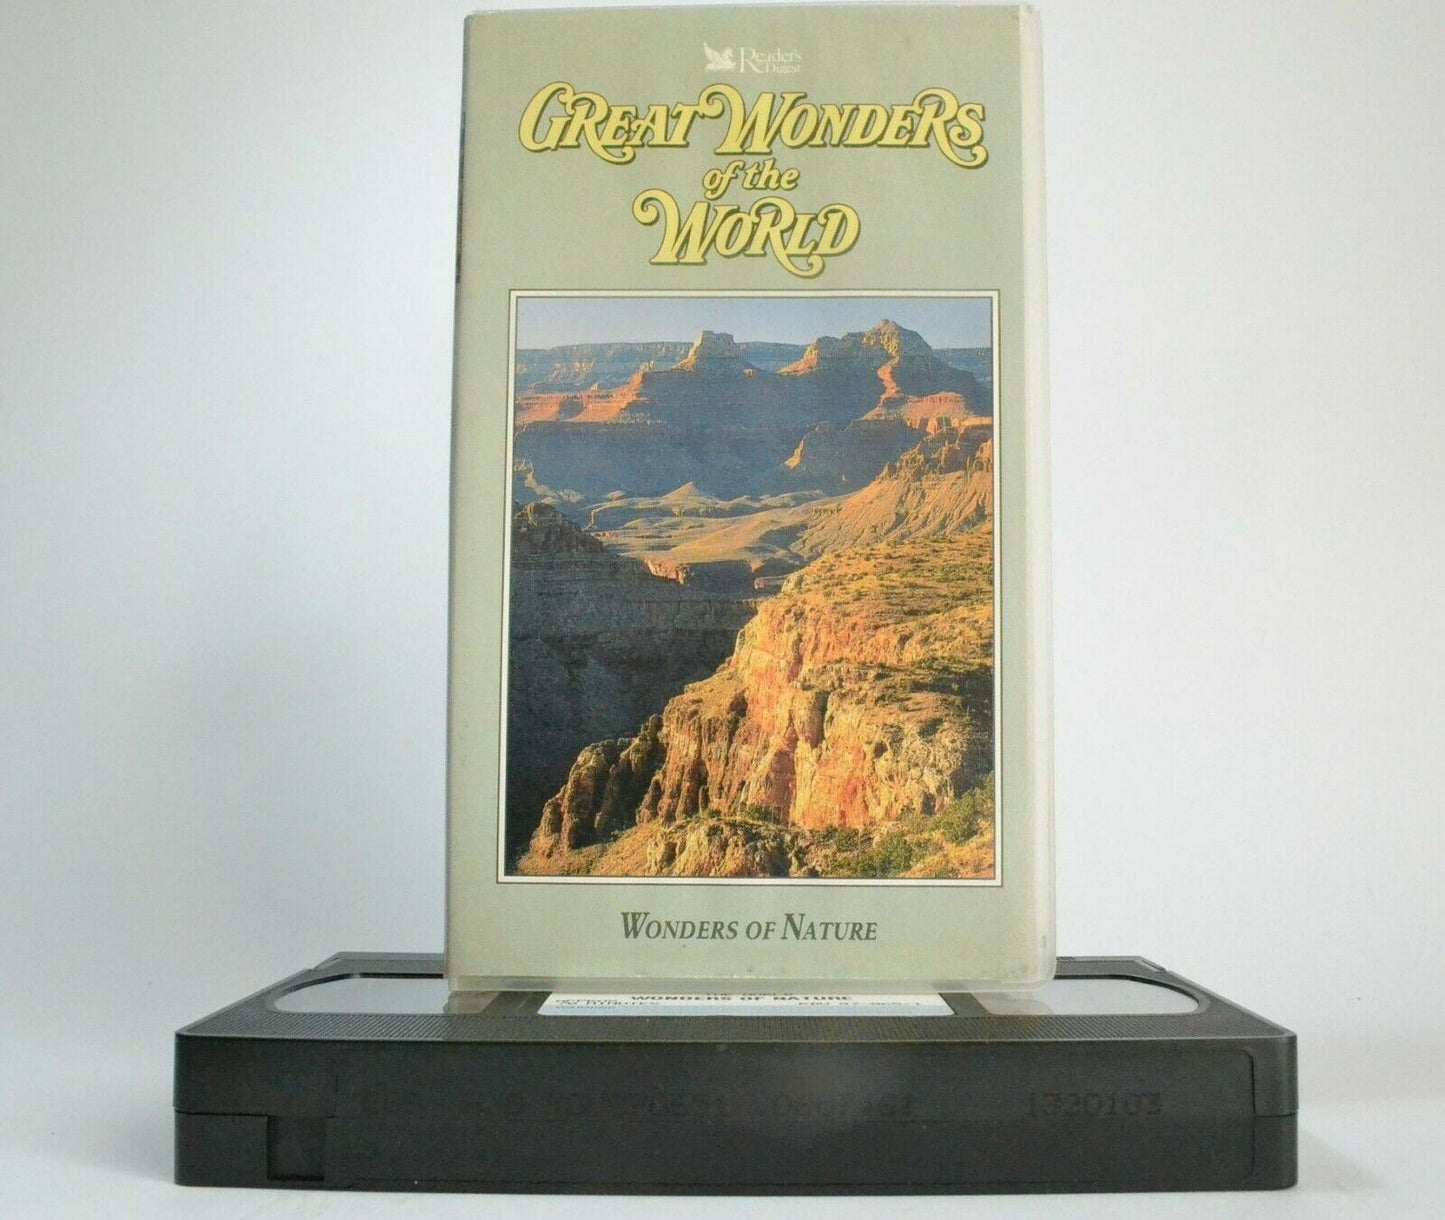 Great Wonders Of The World: Wonders Of Nature [Grand Canyon / Serengeti] Pal VHS-